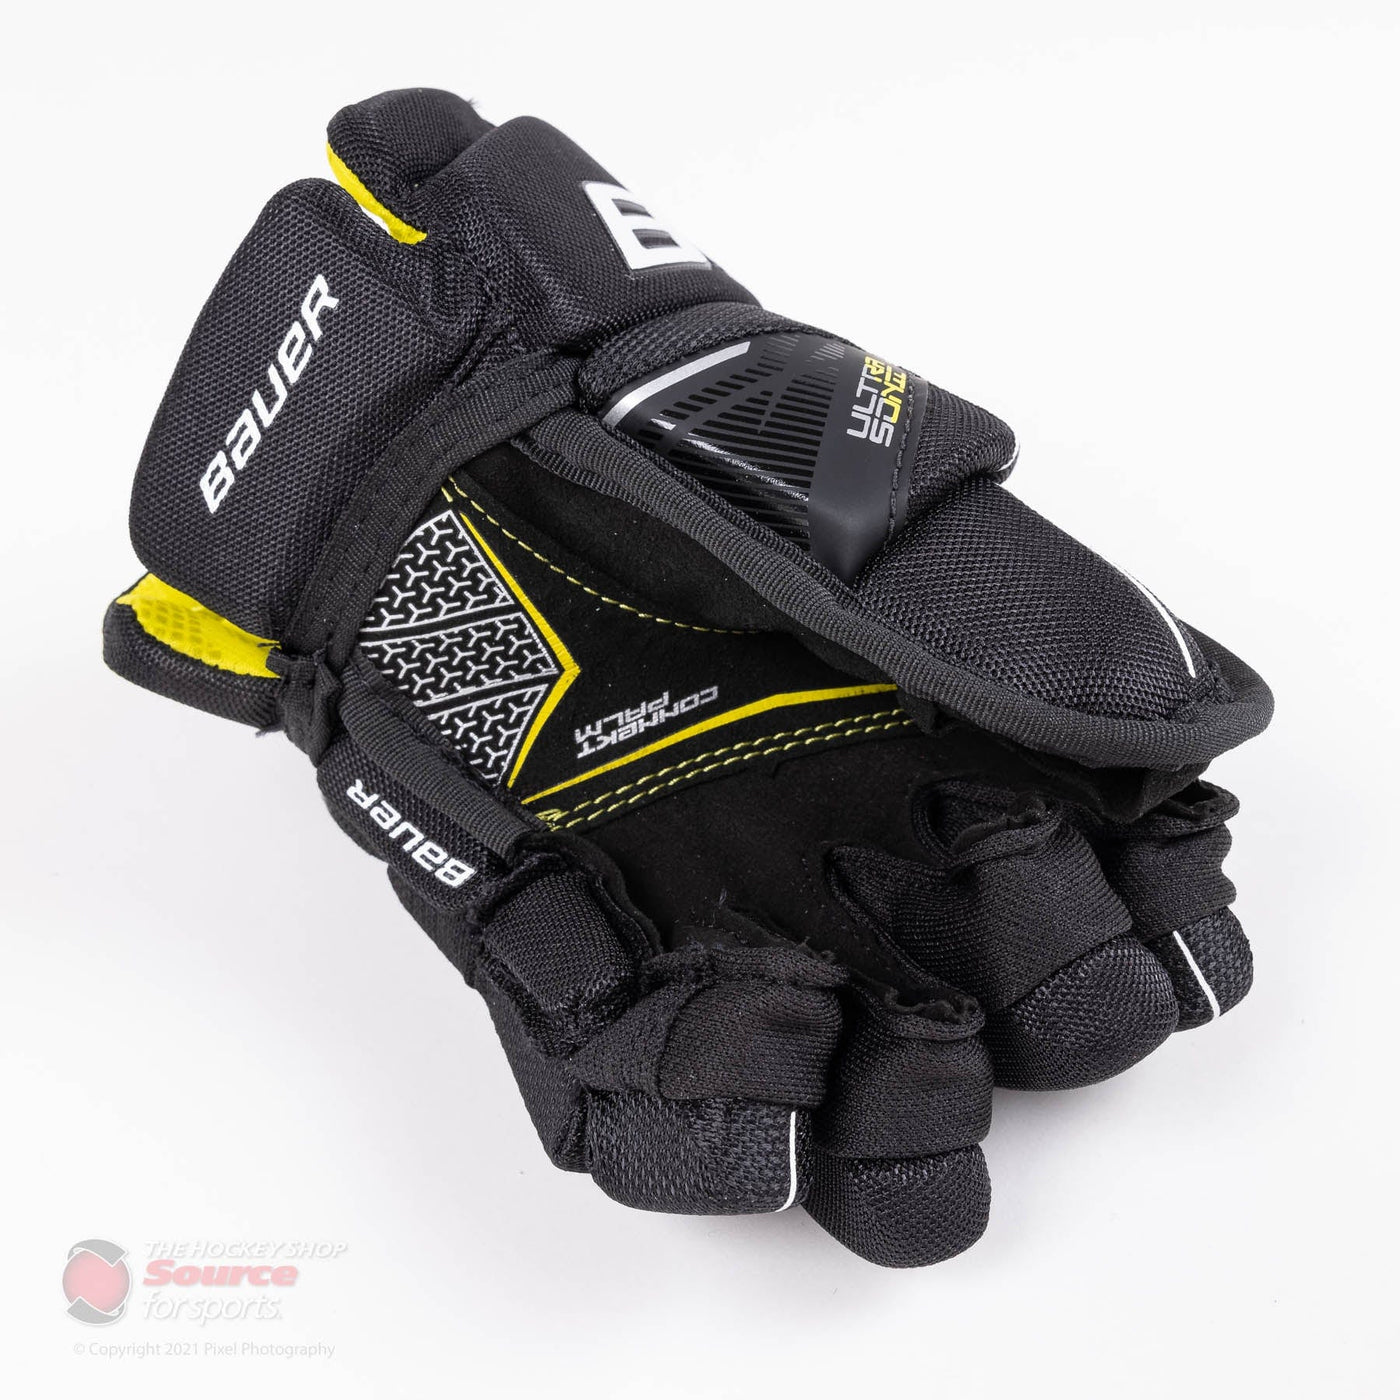 Bauer Supreme UltraSonic Youth Hockey Gloves